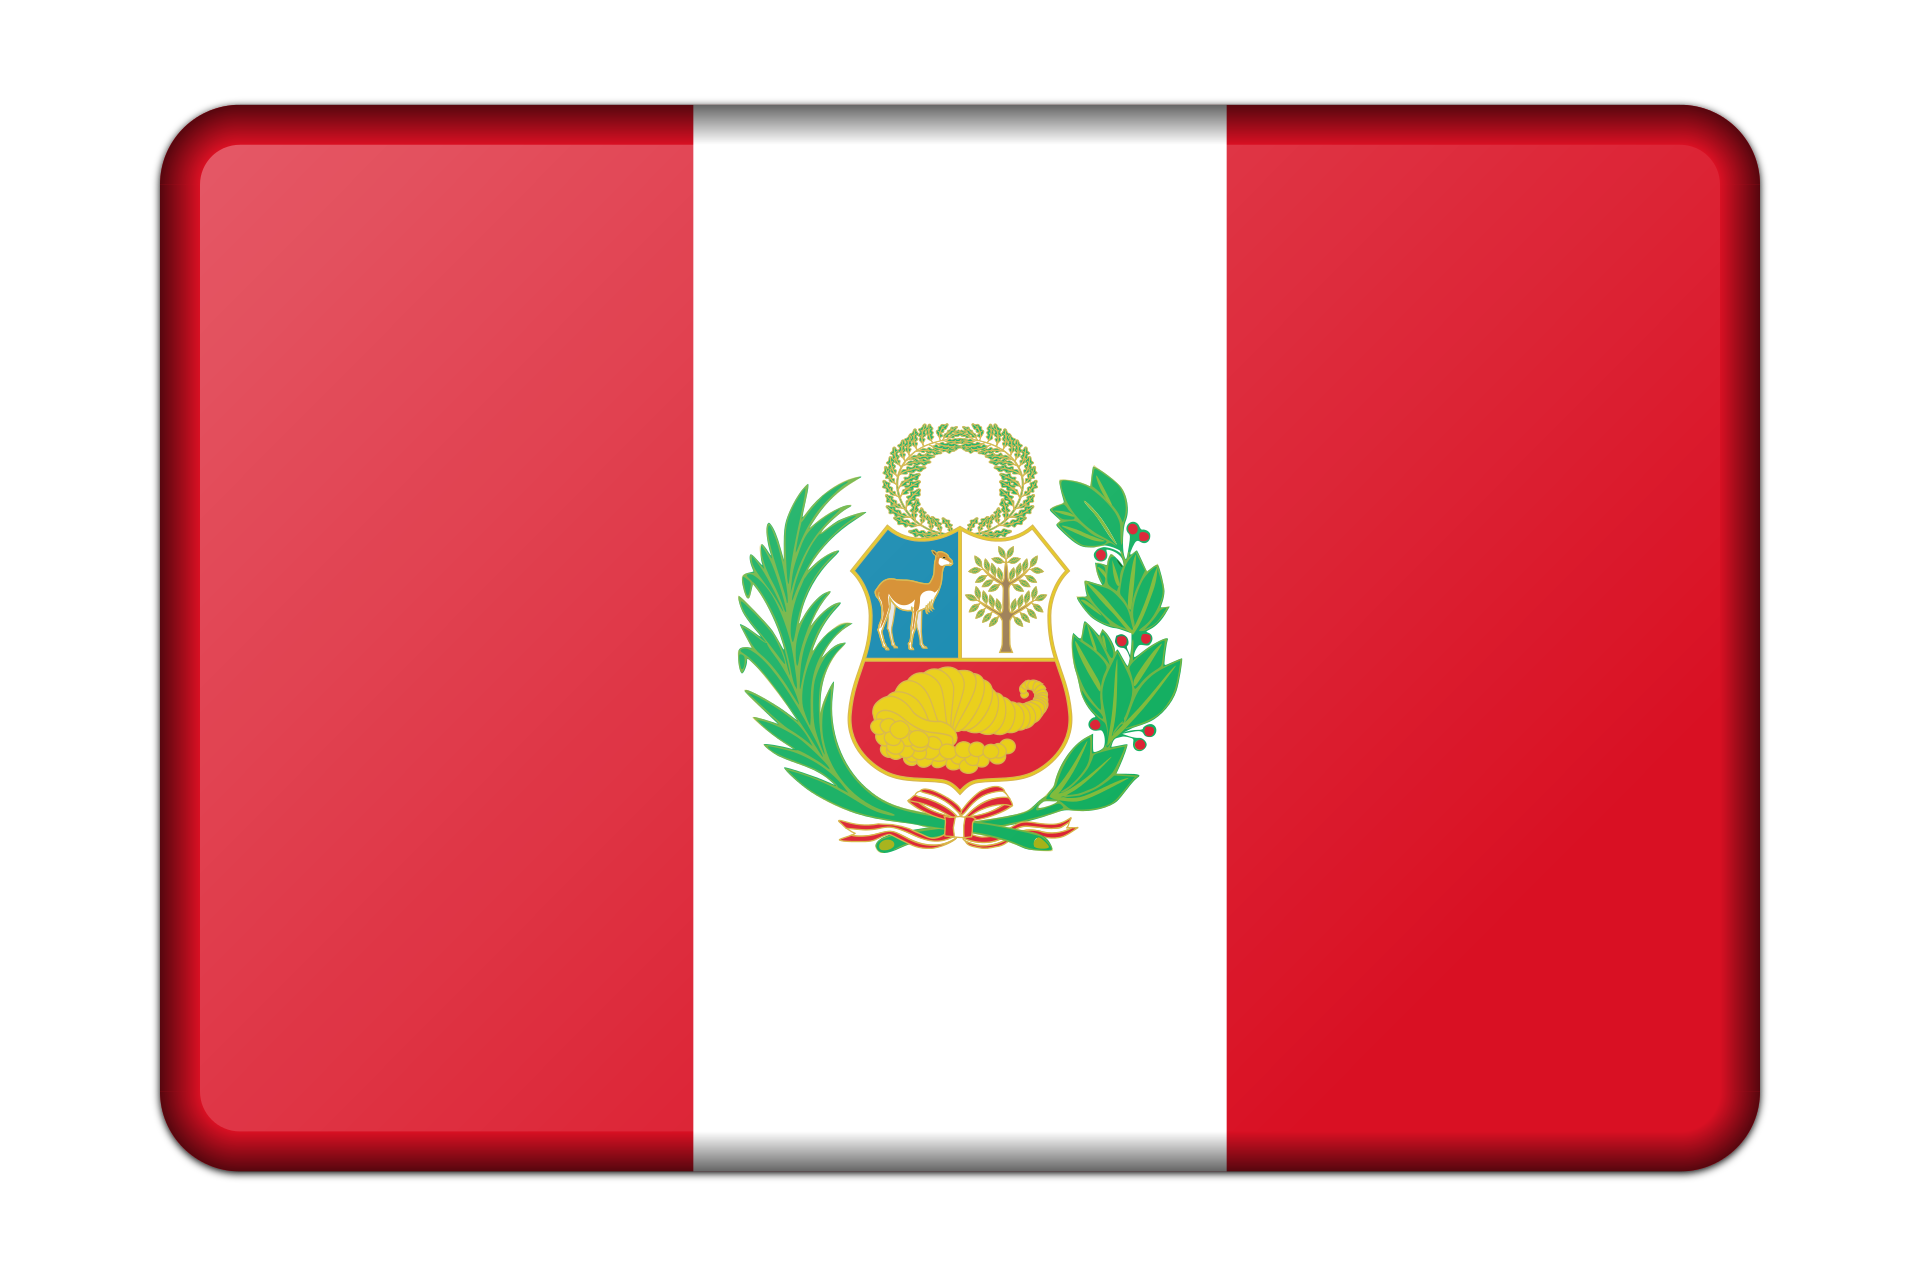 Peru (c) Pixabay